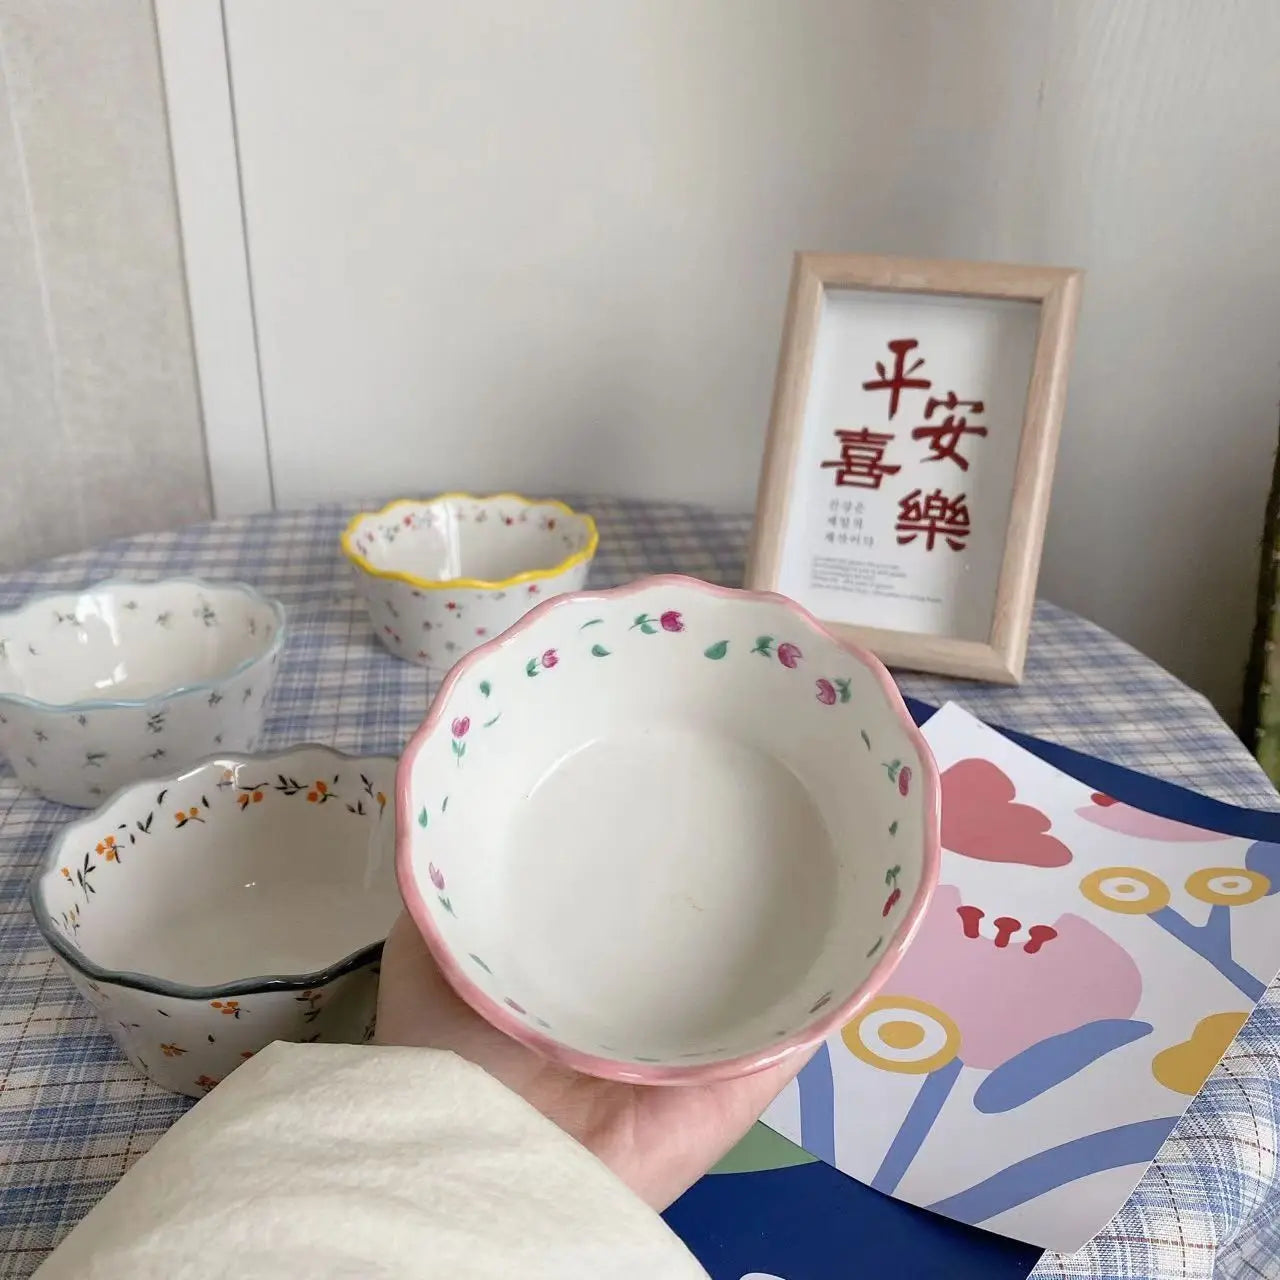 Hand painted Ceramic Dessert Bowls